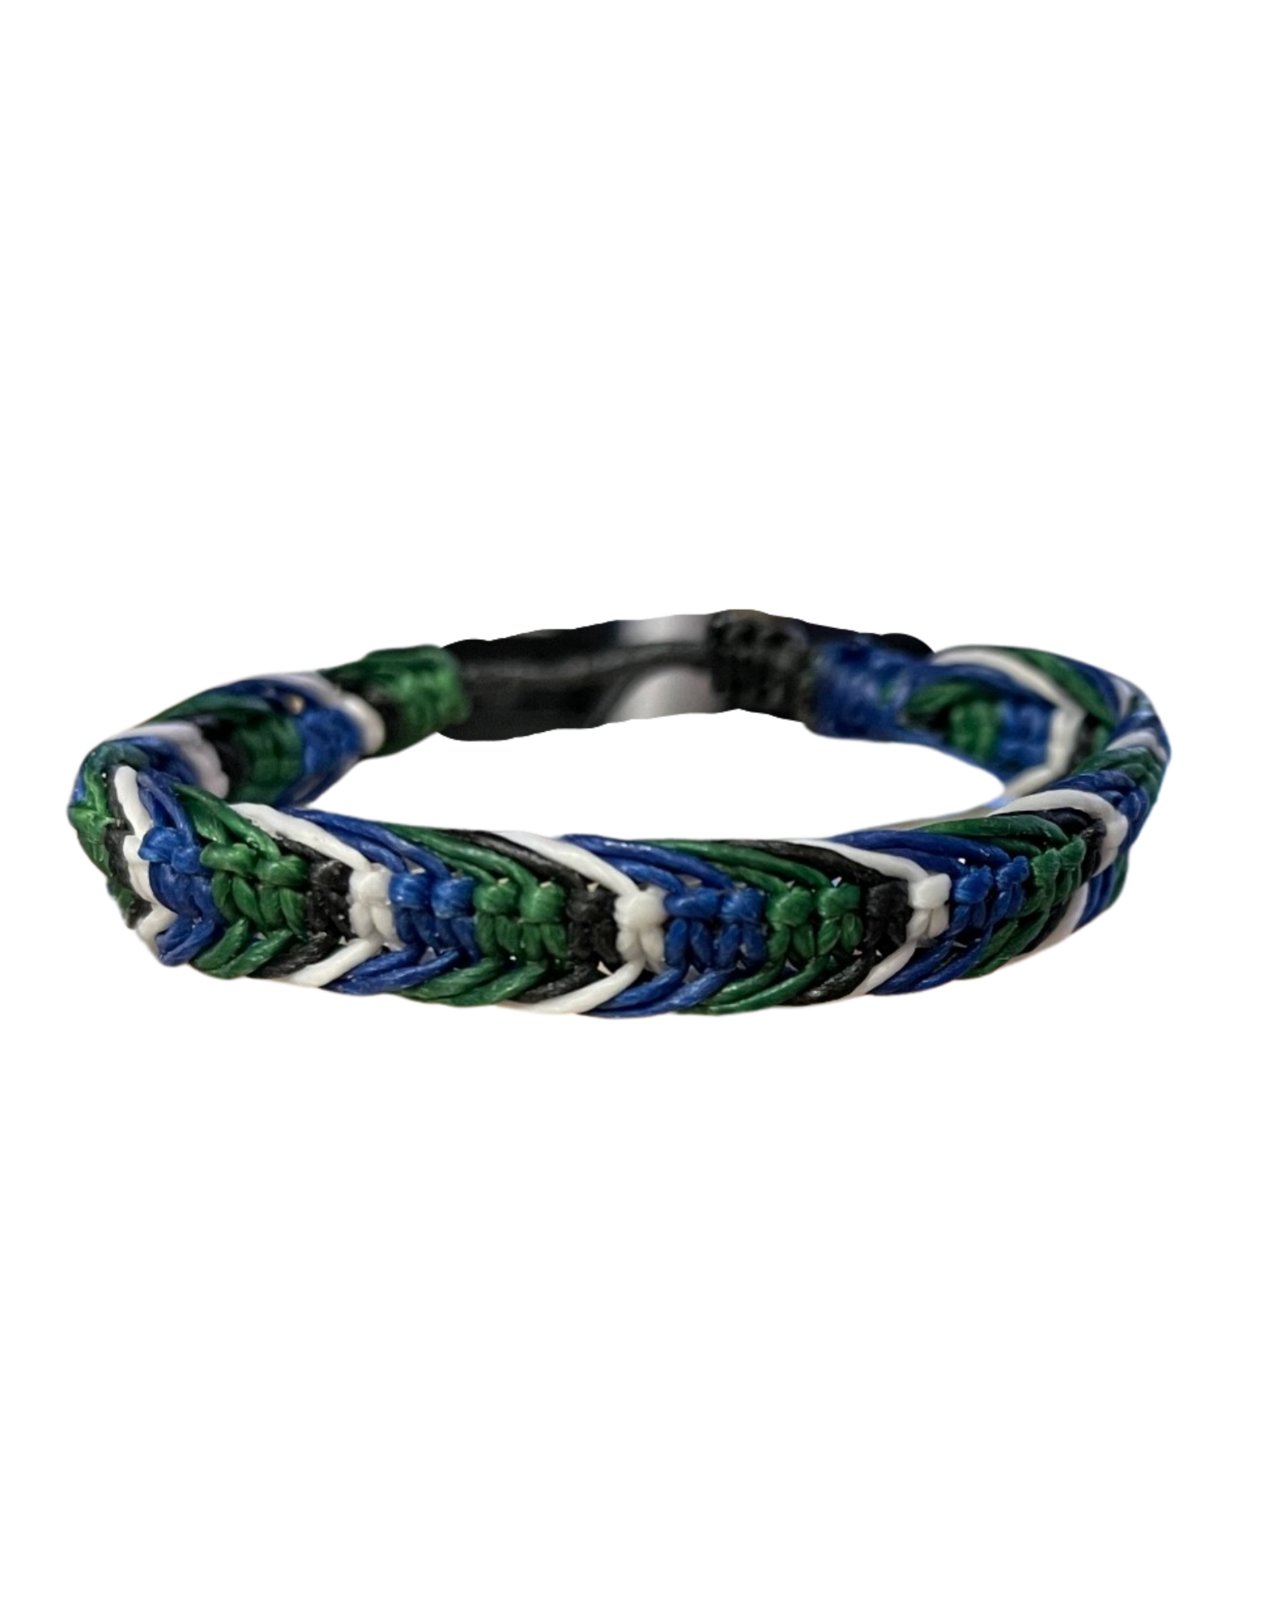 Torres Strait Island Wristband - 3 Colour Braided (Waxed Thread)